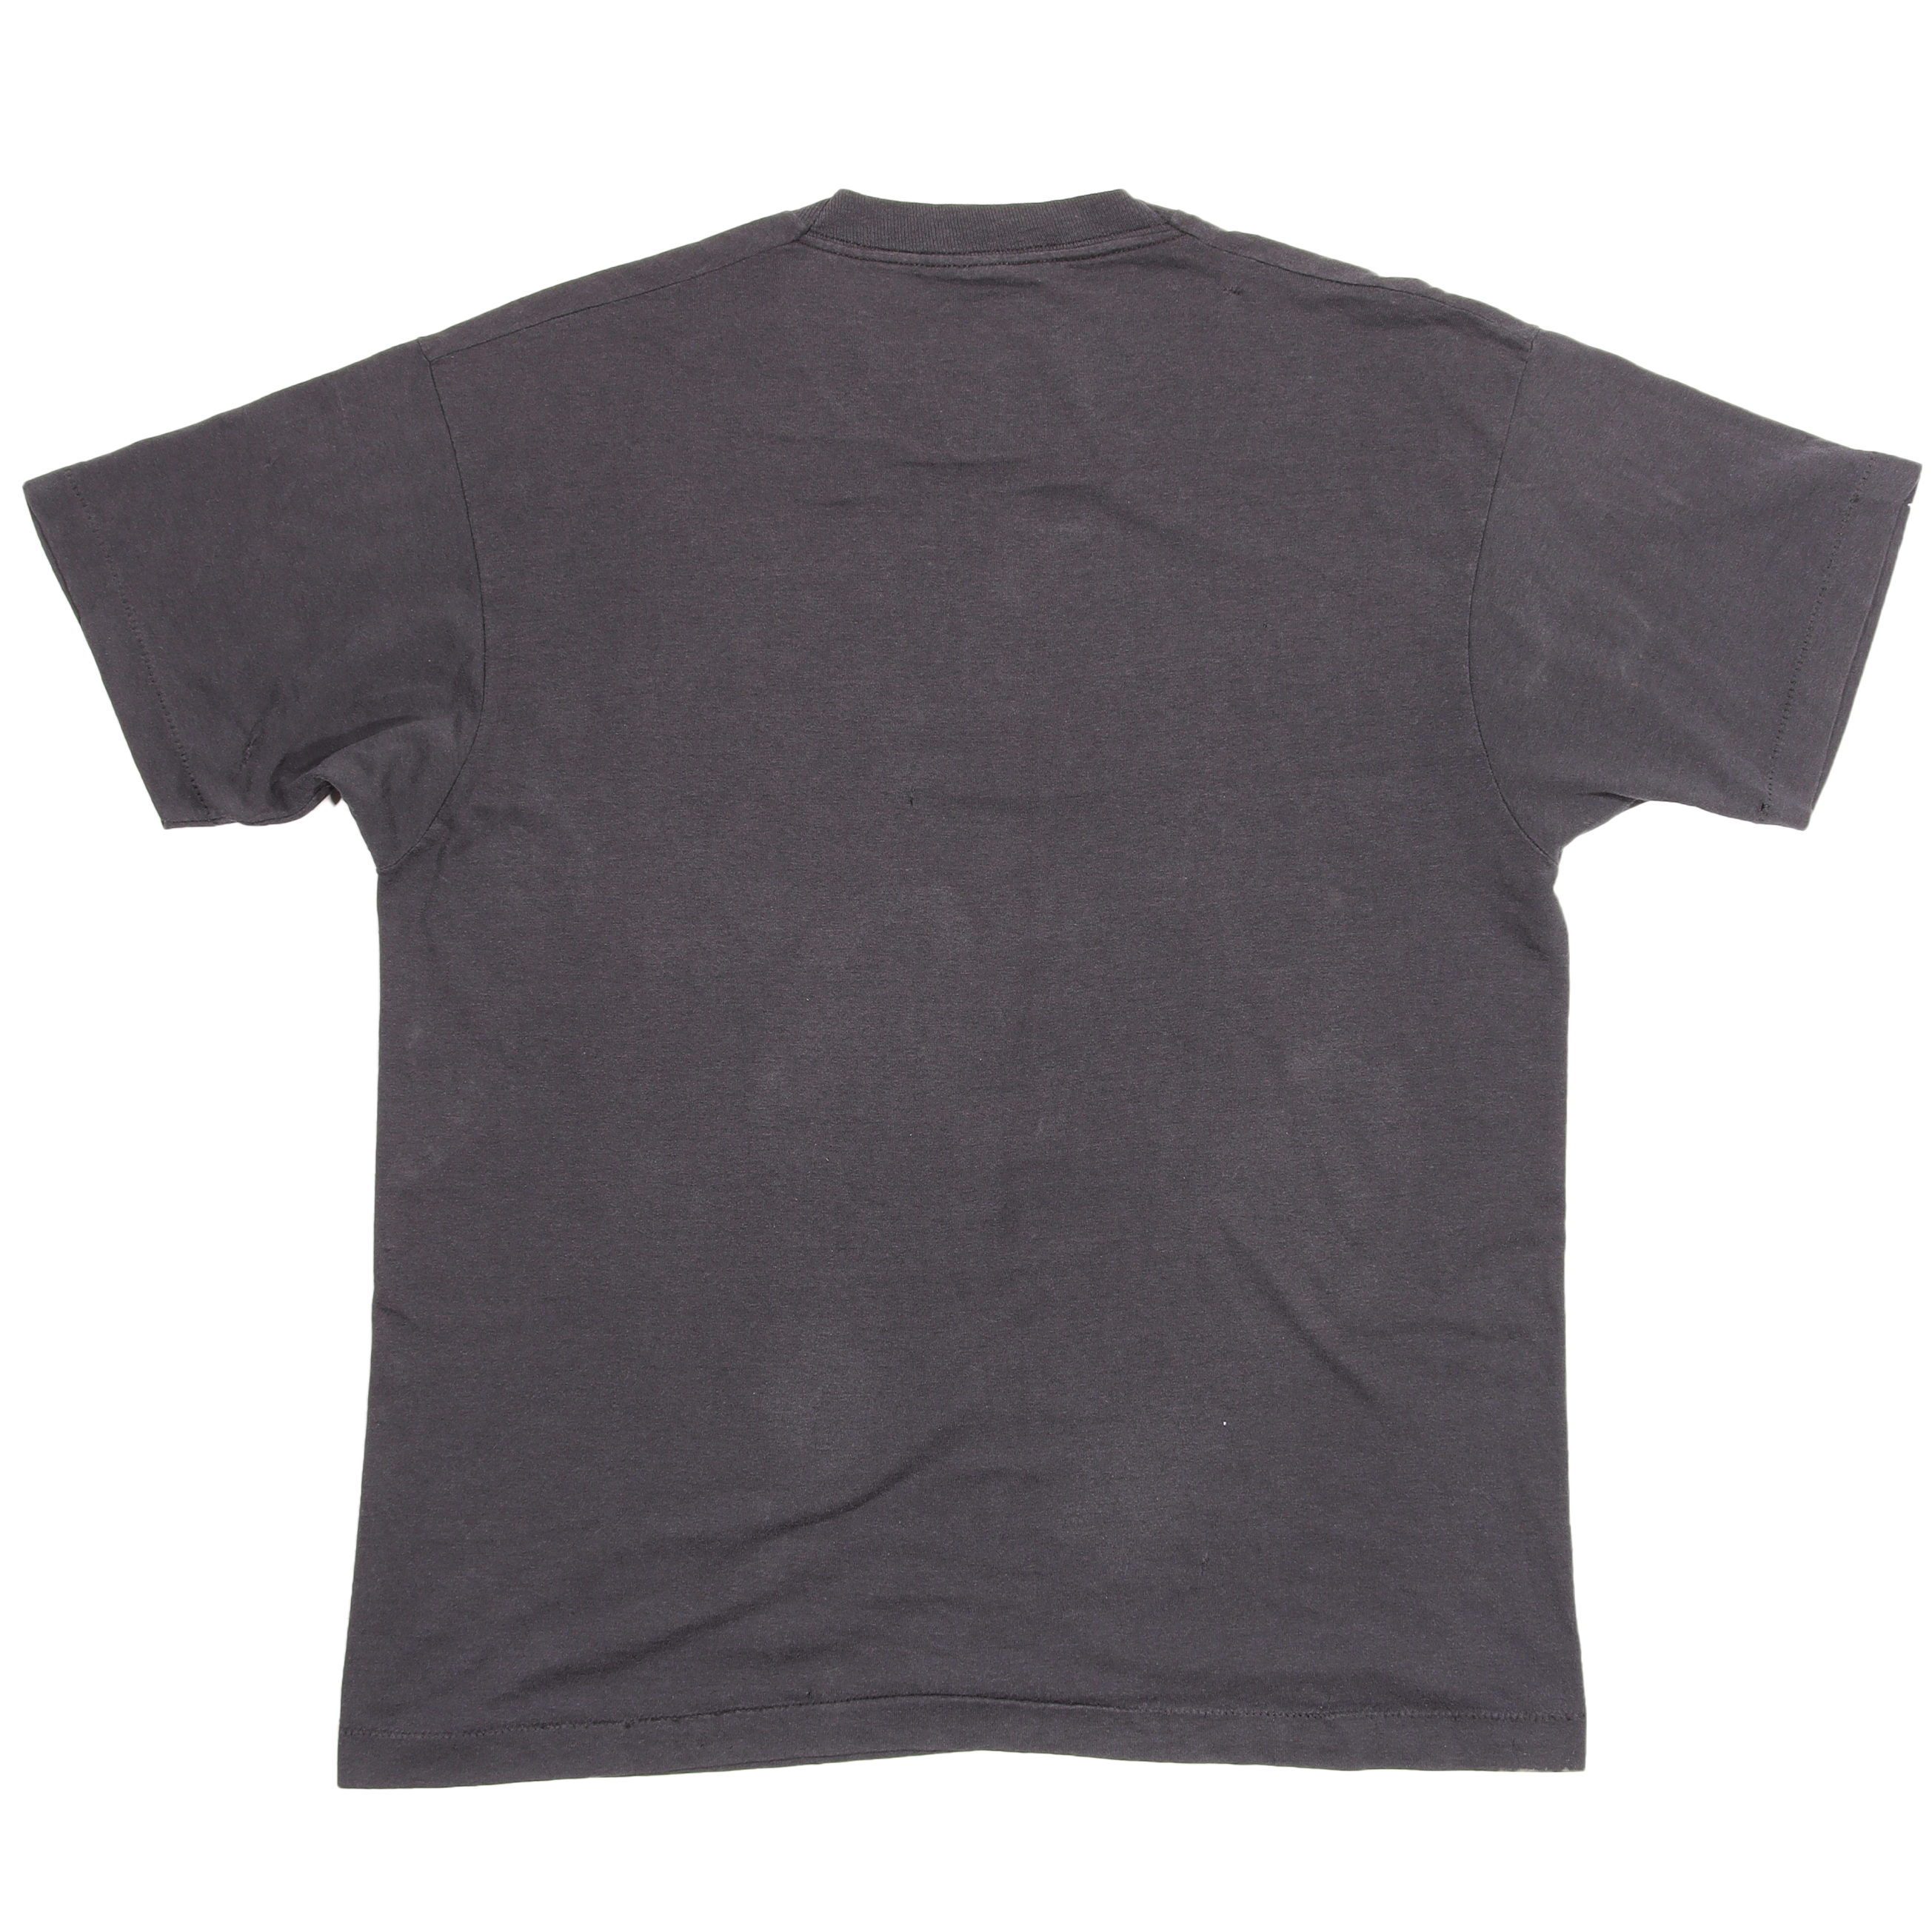 Bela Lugosis Dead T-Shirt